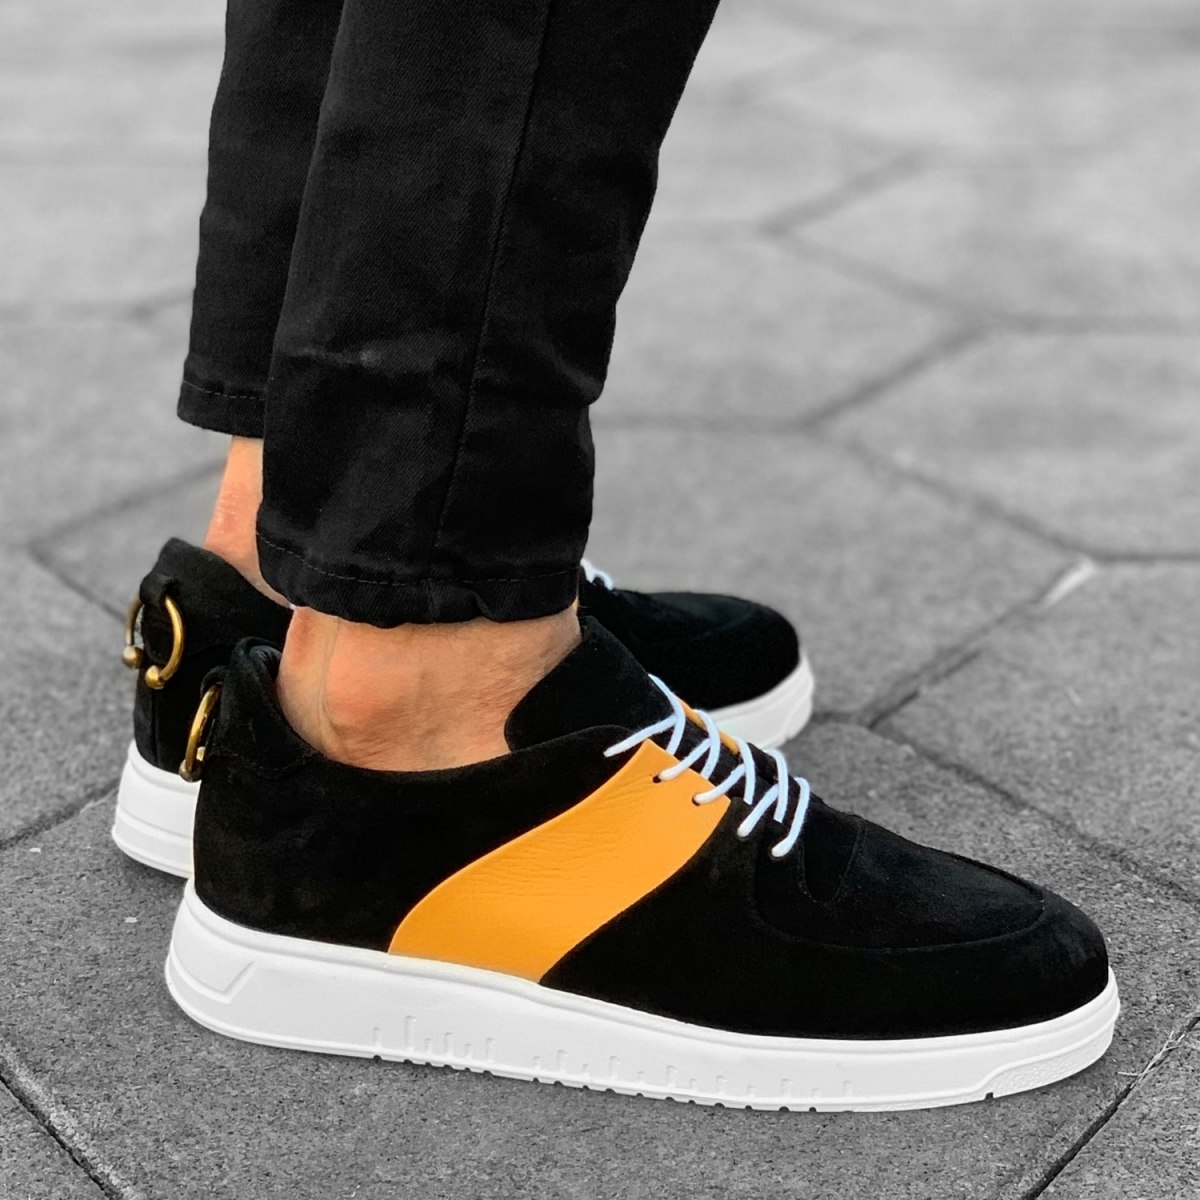 Martin Valen Men's Premium Genuine Leather Sneakers Black & Yellow